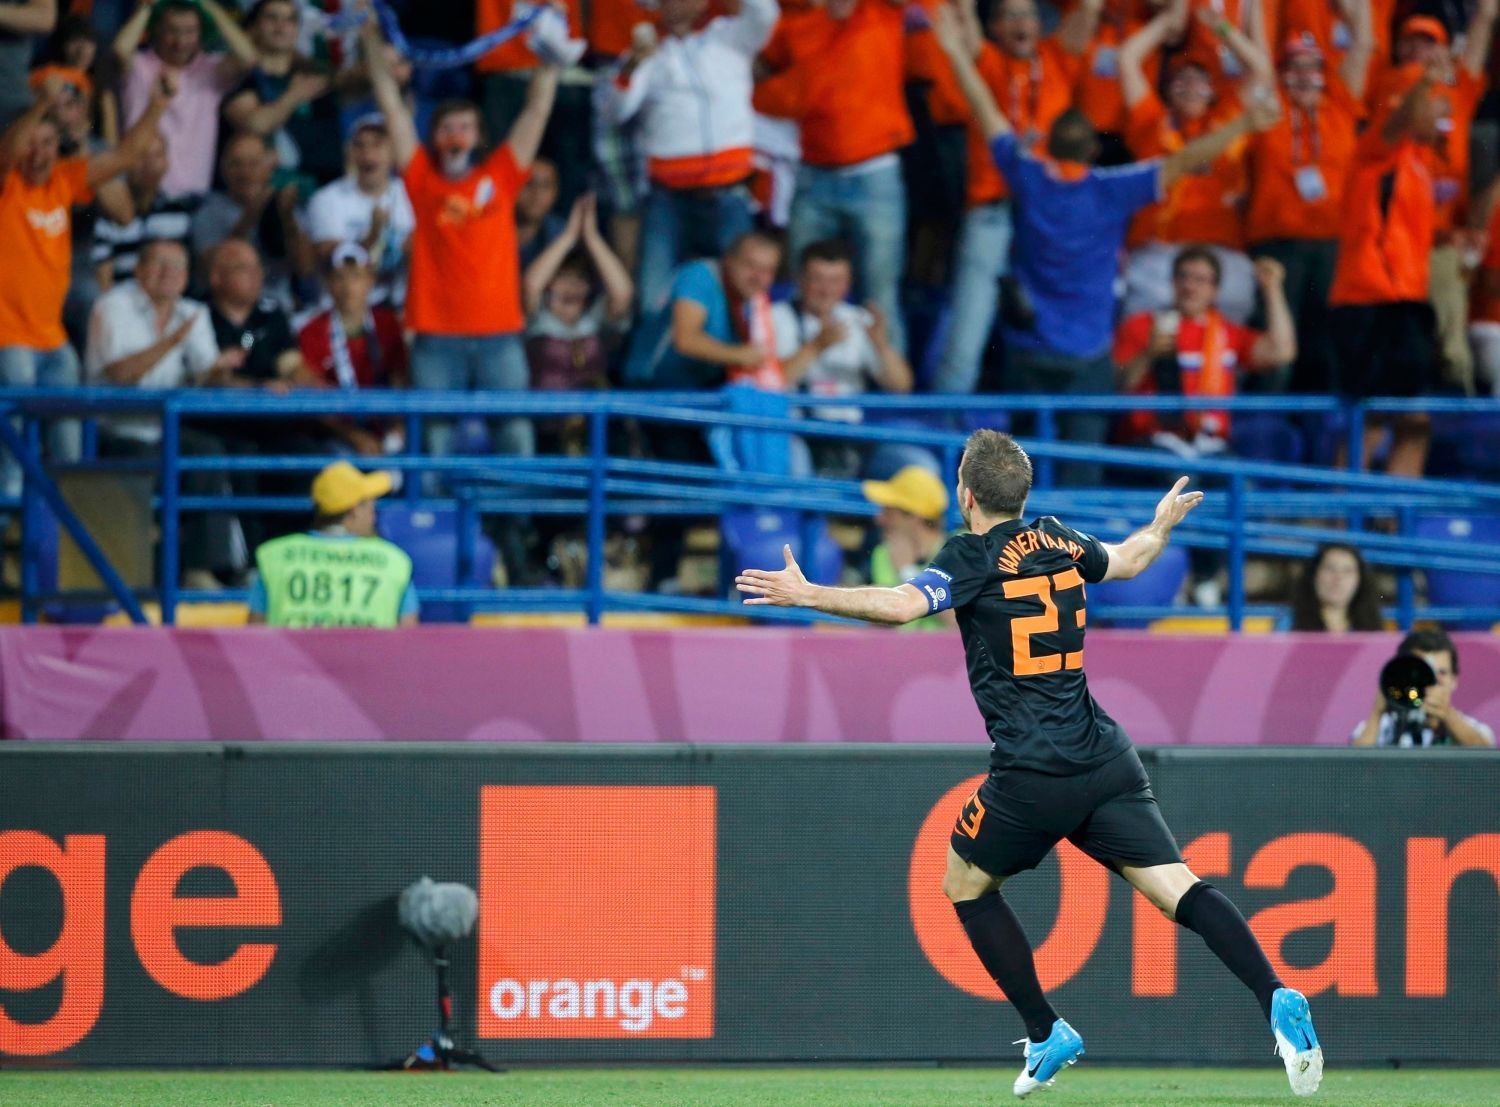 Nizozemský fotbalista Rafael van der Vaart slaví gól proti Portugalsku v utkání skupiny B na Euru 2012